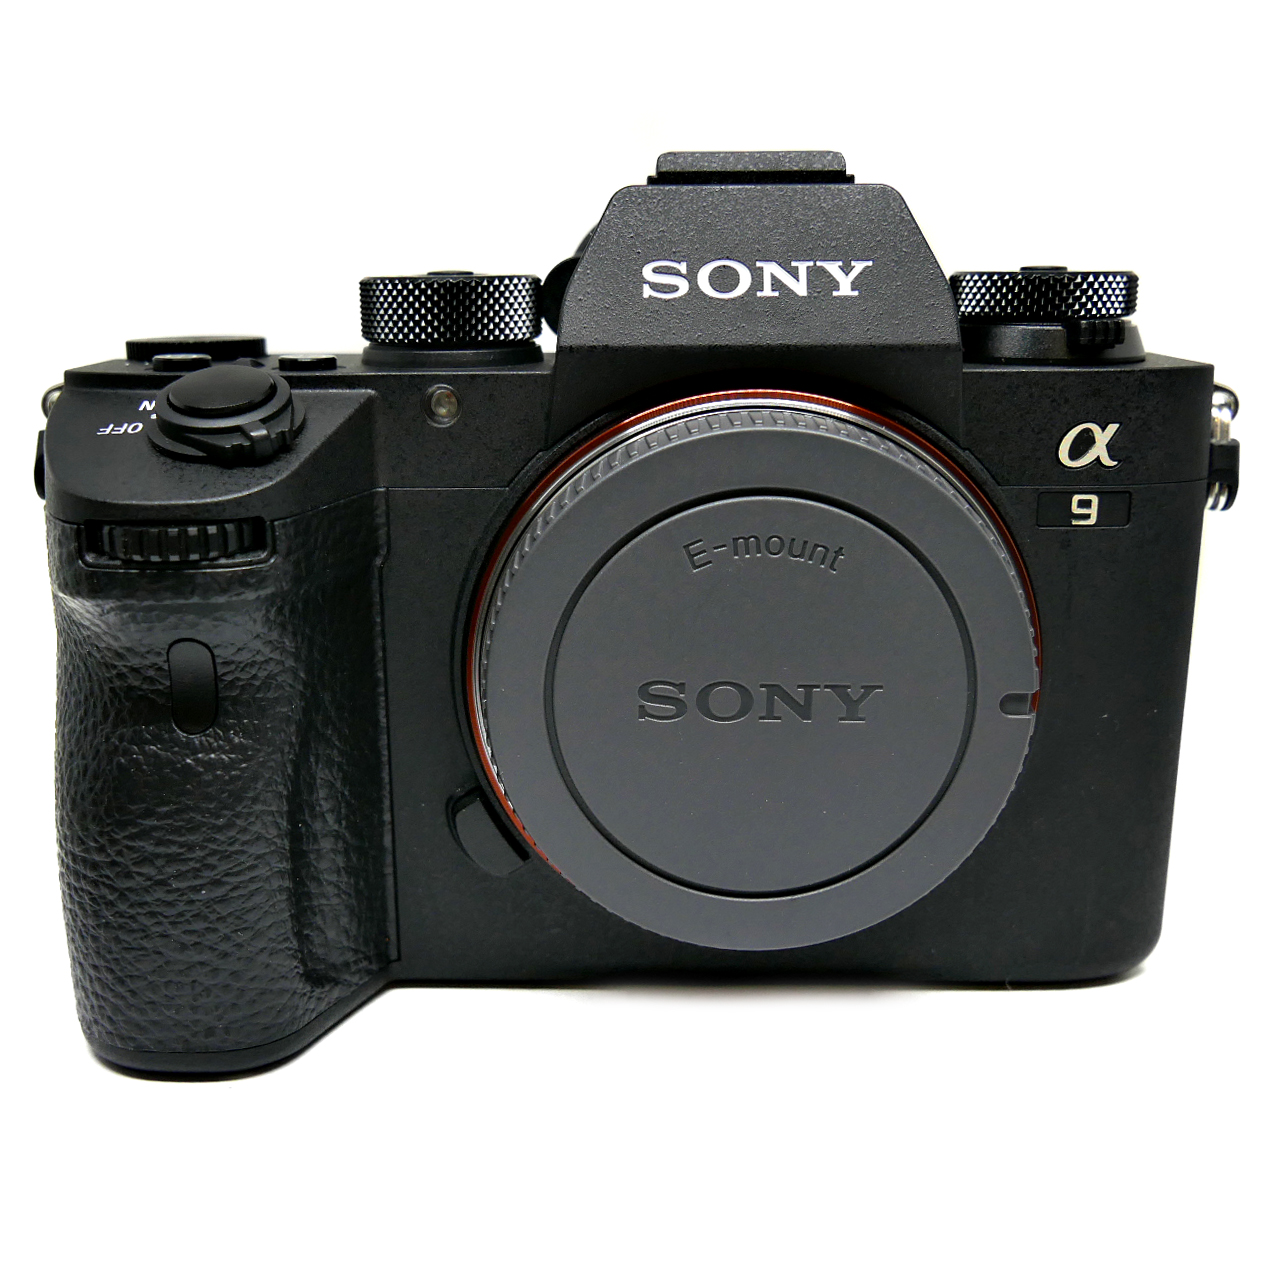 (Myyty) Sony A9 runko (SC:770) (käytetty) (takuu)